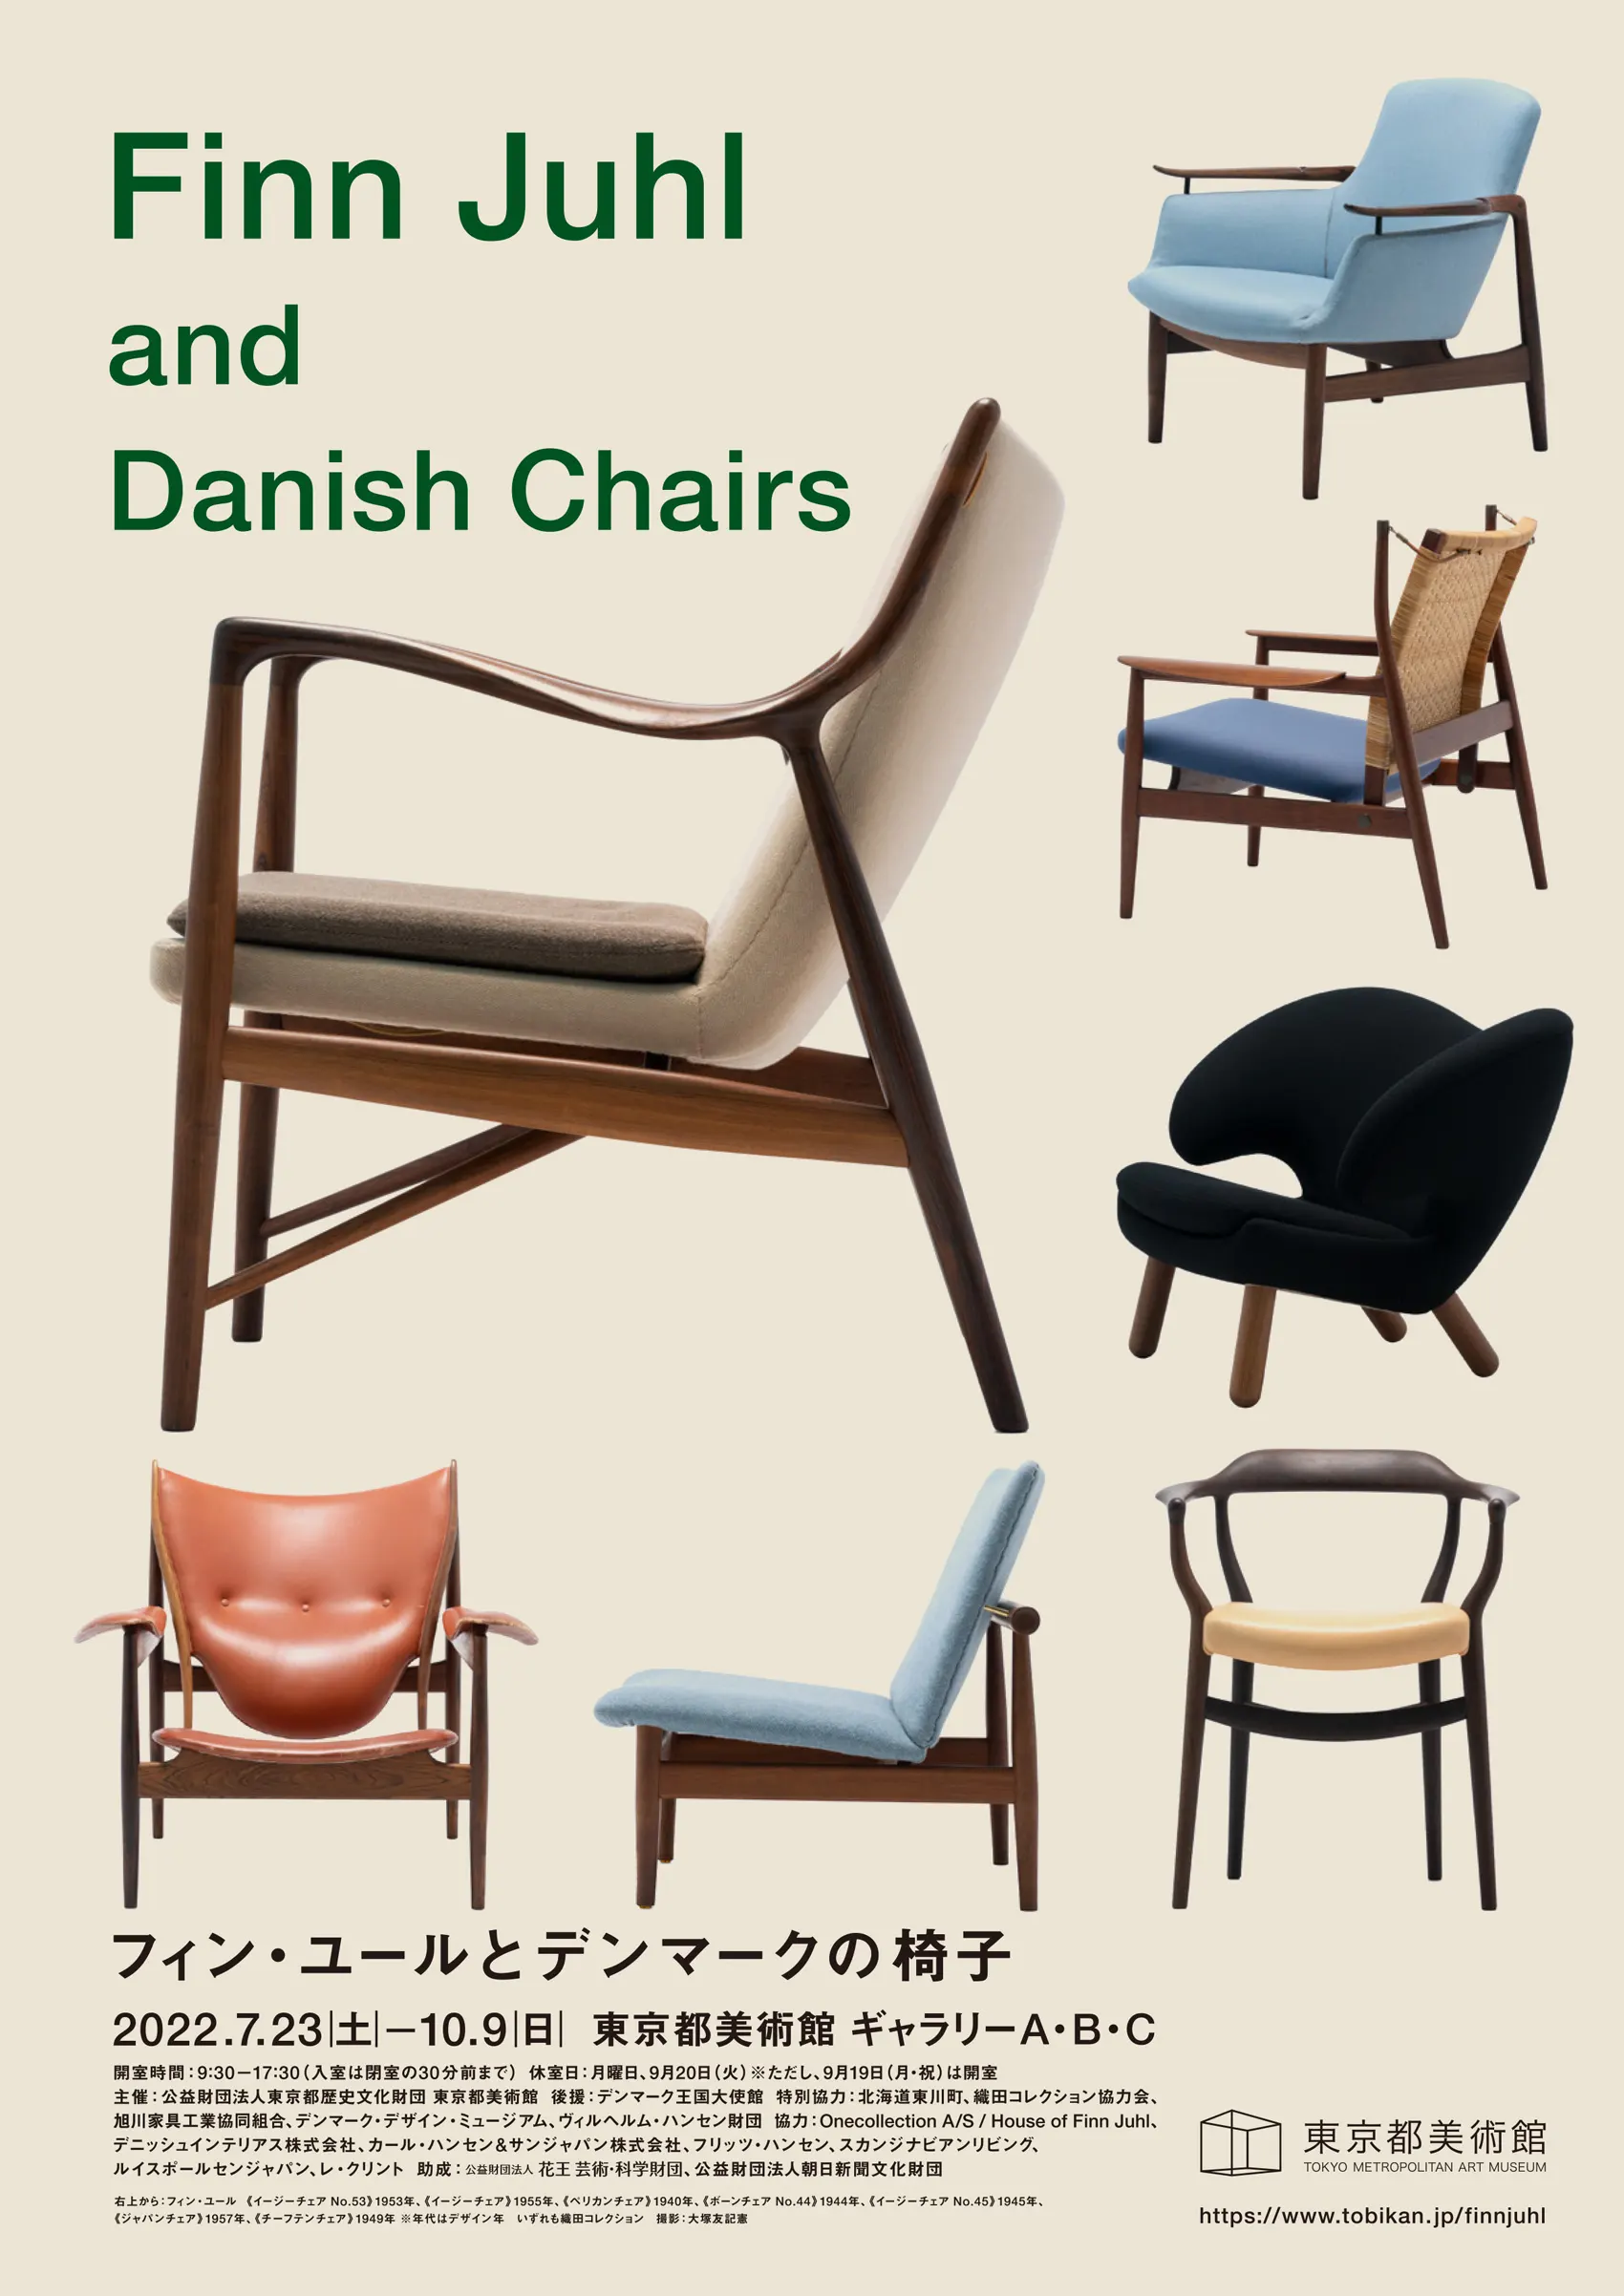 "Finn Juhl and Danish Chairs" flier